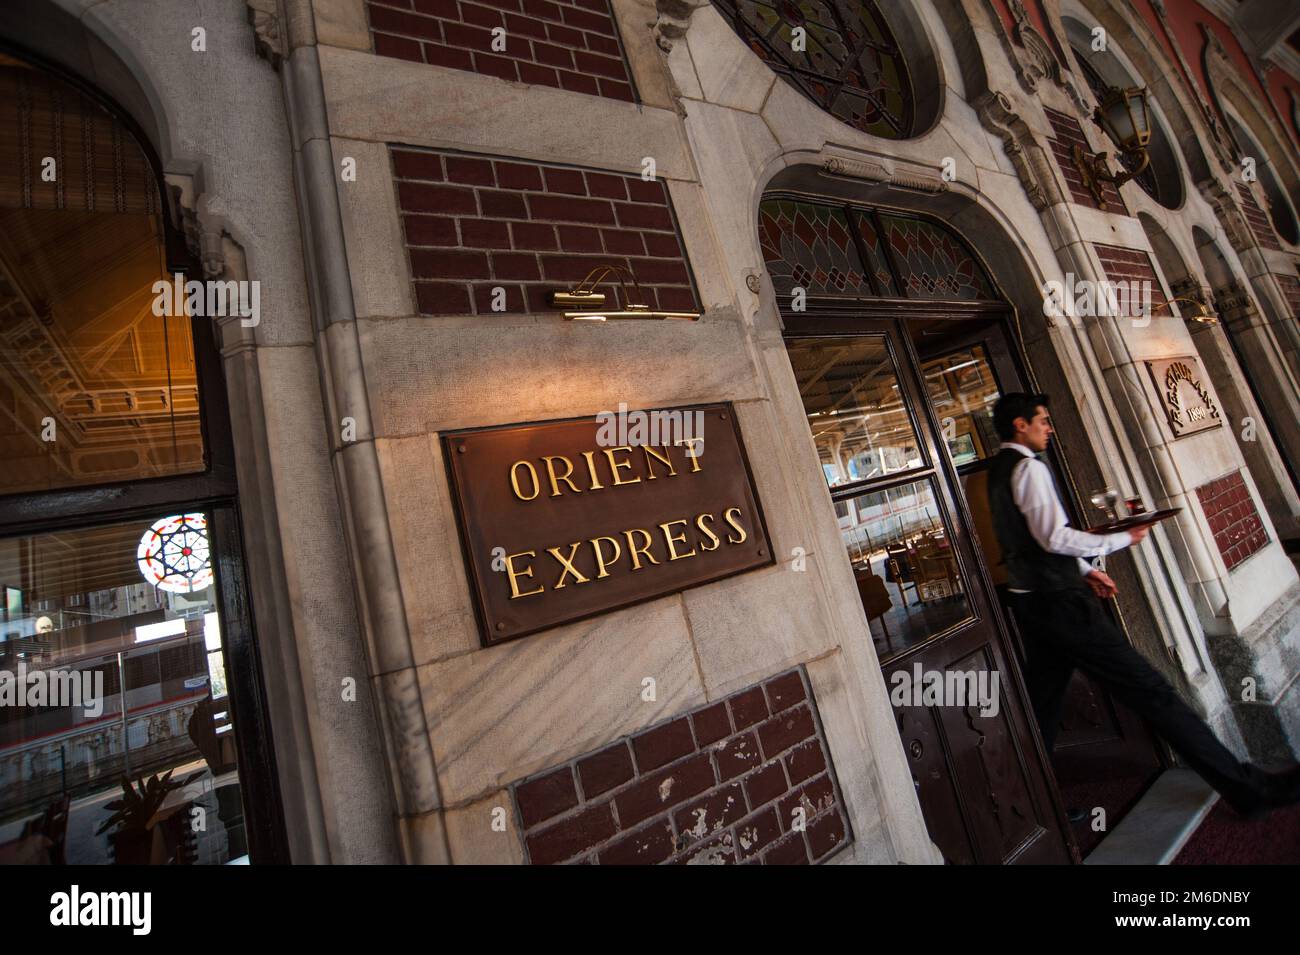 The Orient Express Restaurant Sirkeci Gar, Train Station, Istanbul,Turkey Stock Photo